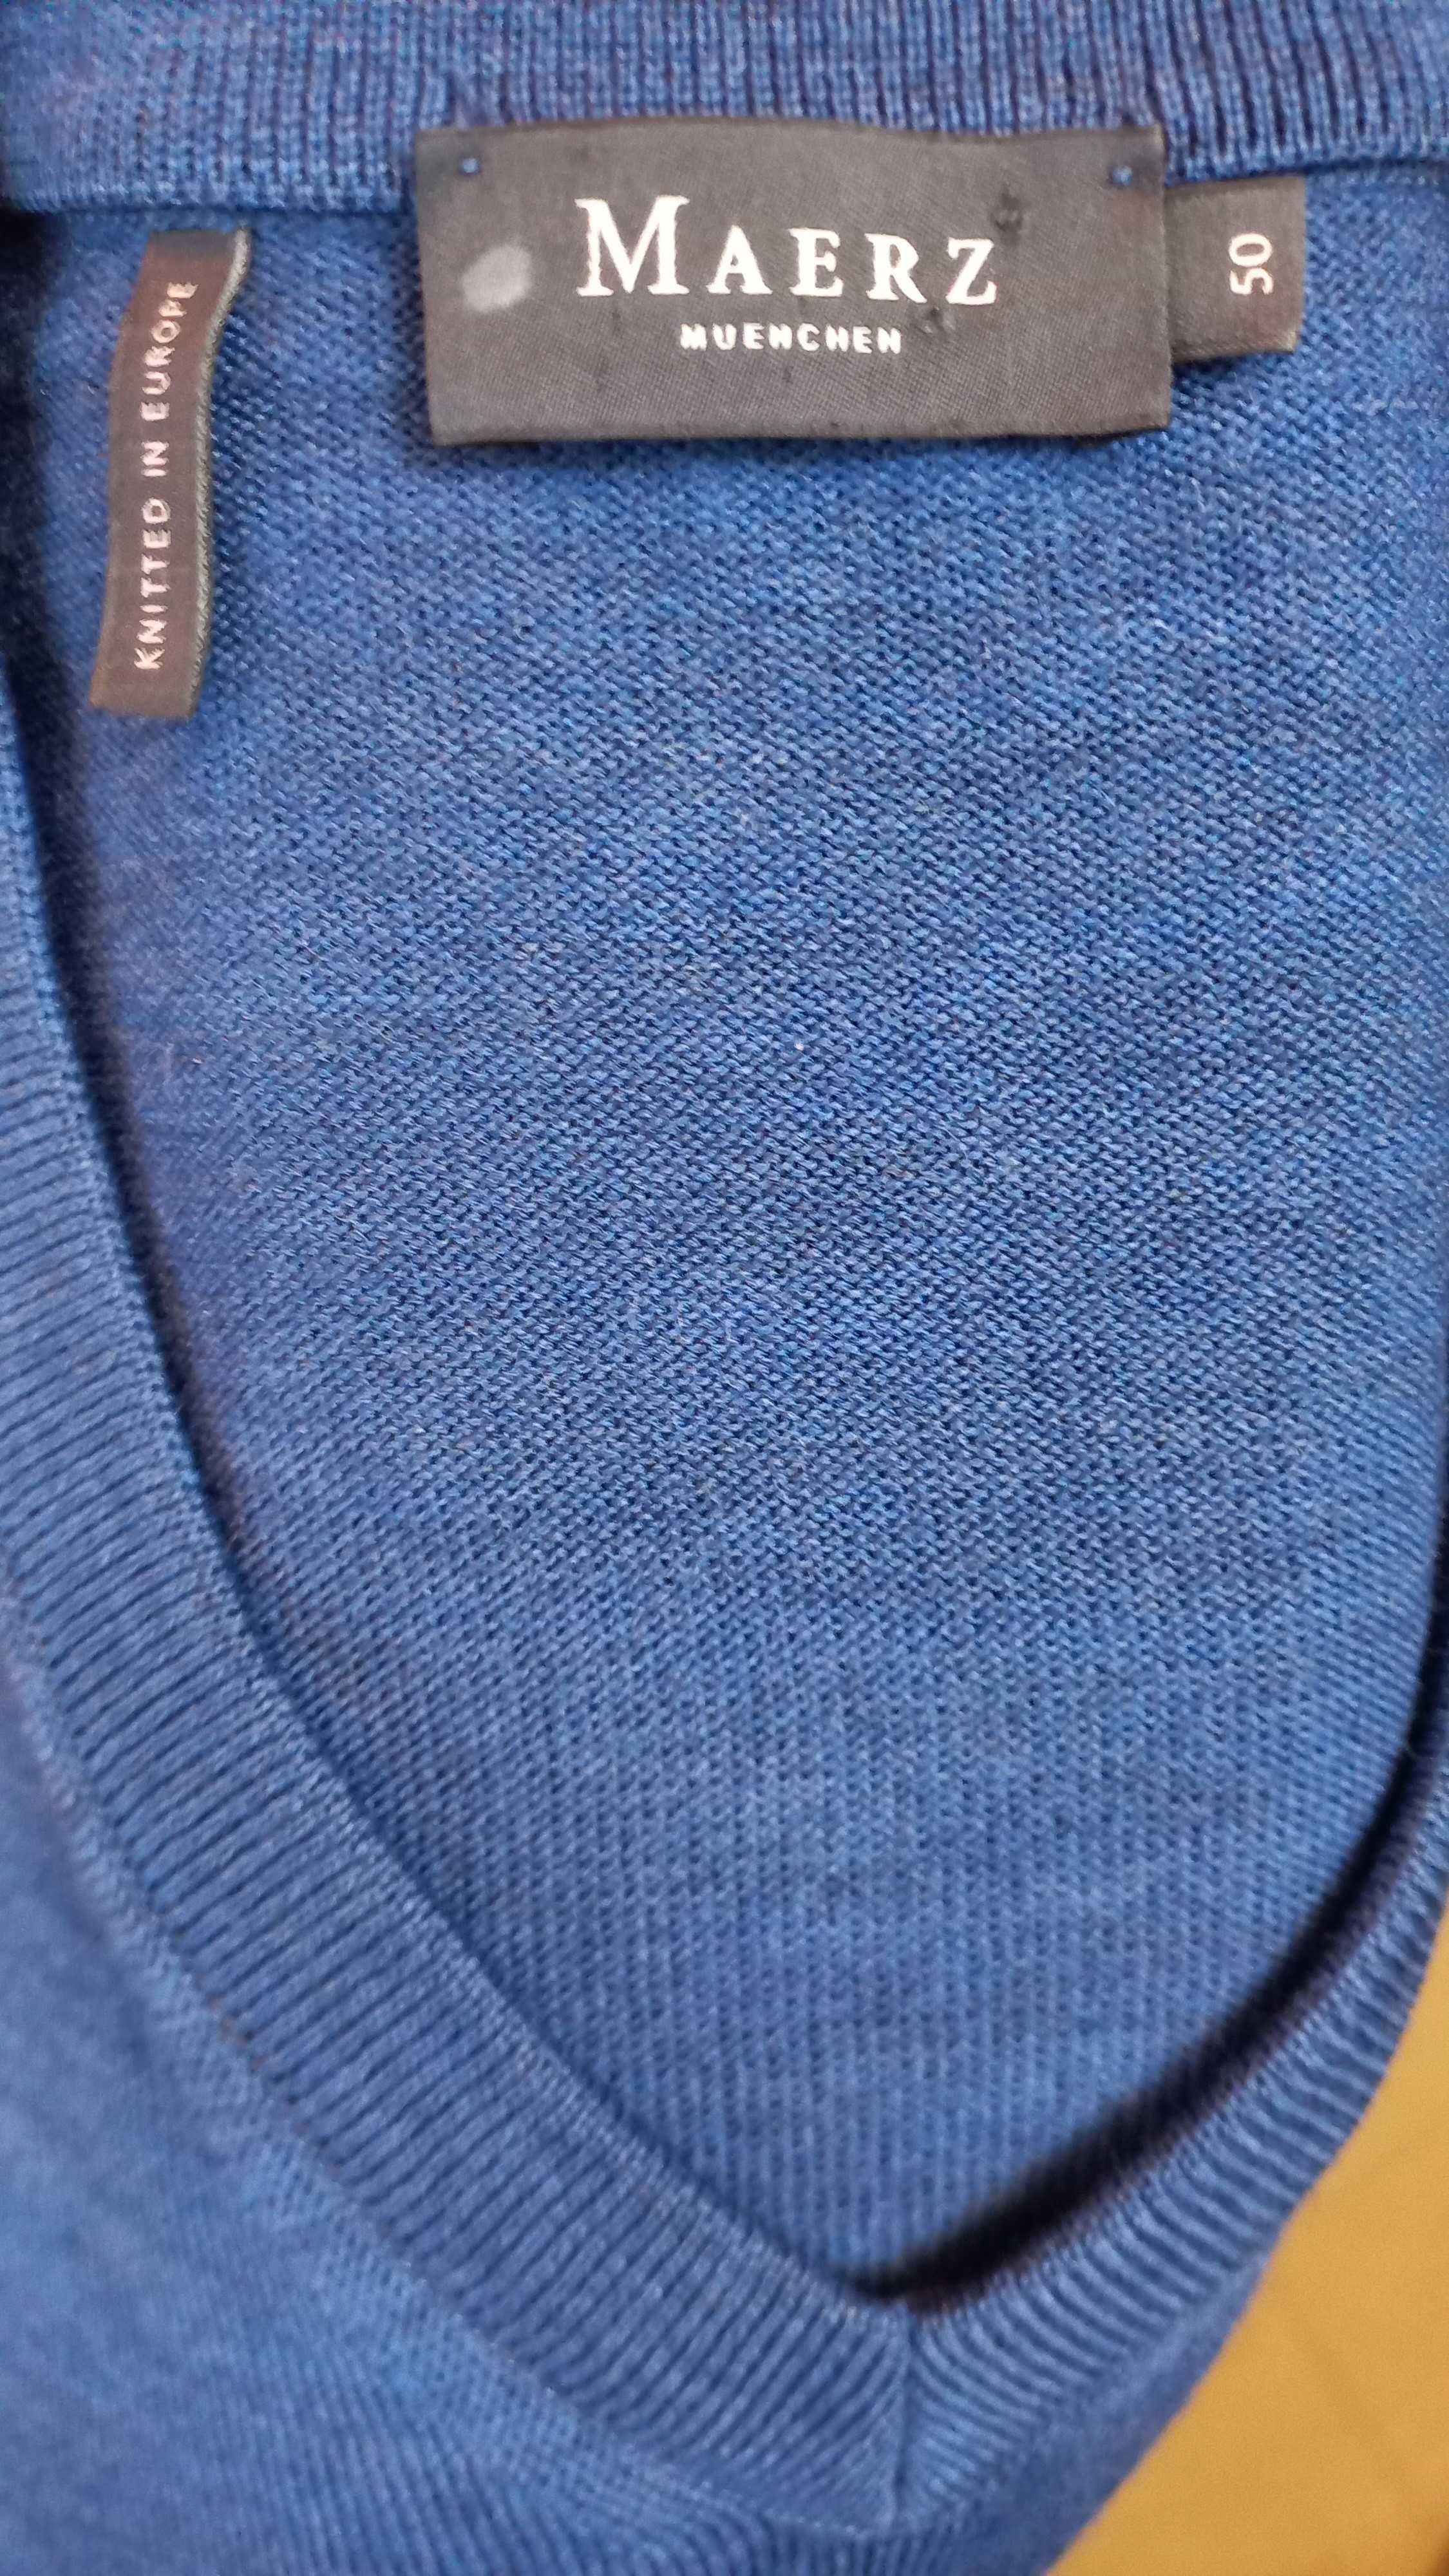 мужской свитер MAERZ (Germany)  Extrafine Merino wool